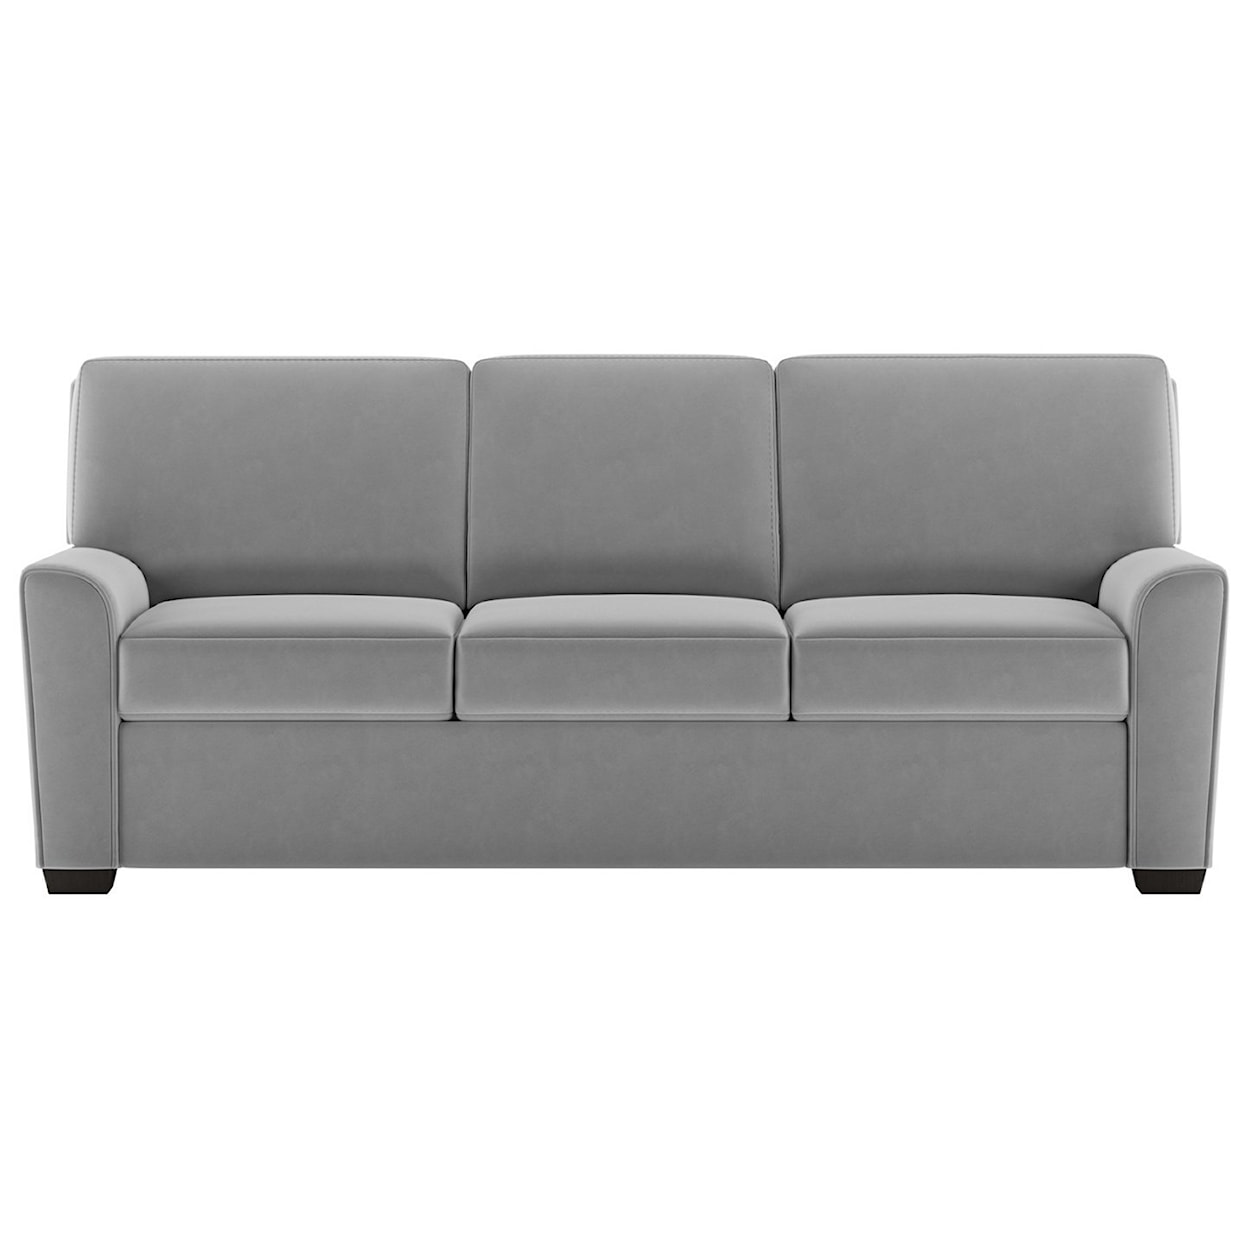 American Leather Klein King Sleeper Sofa